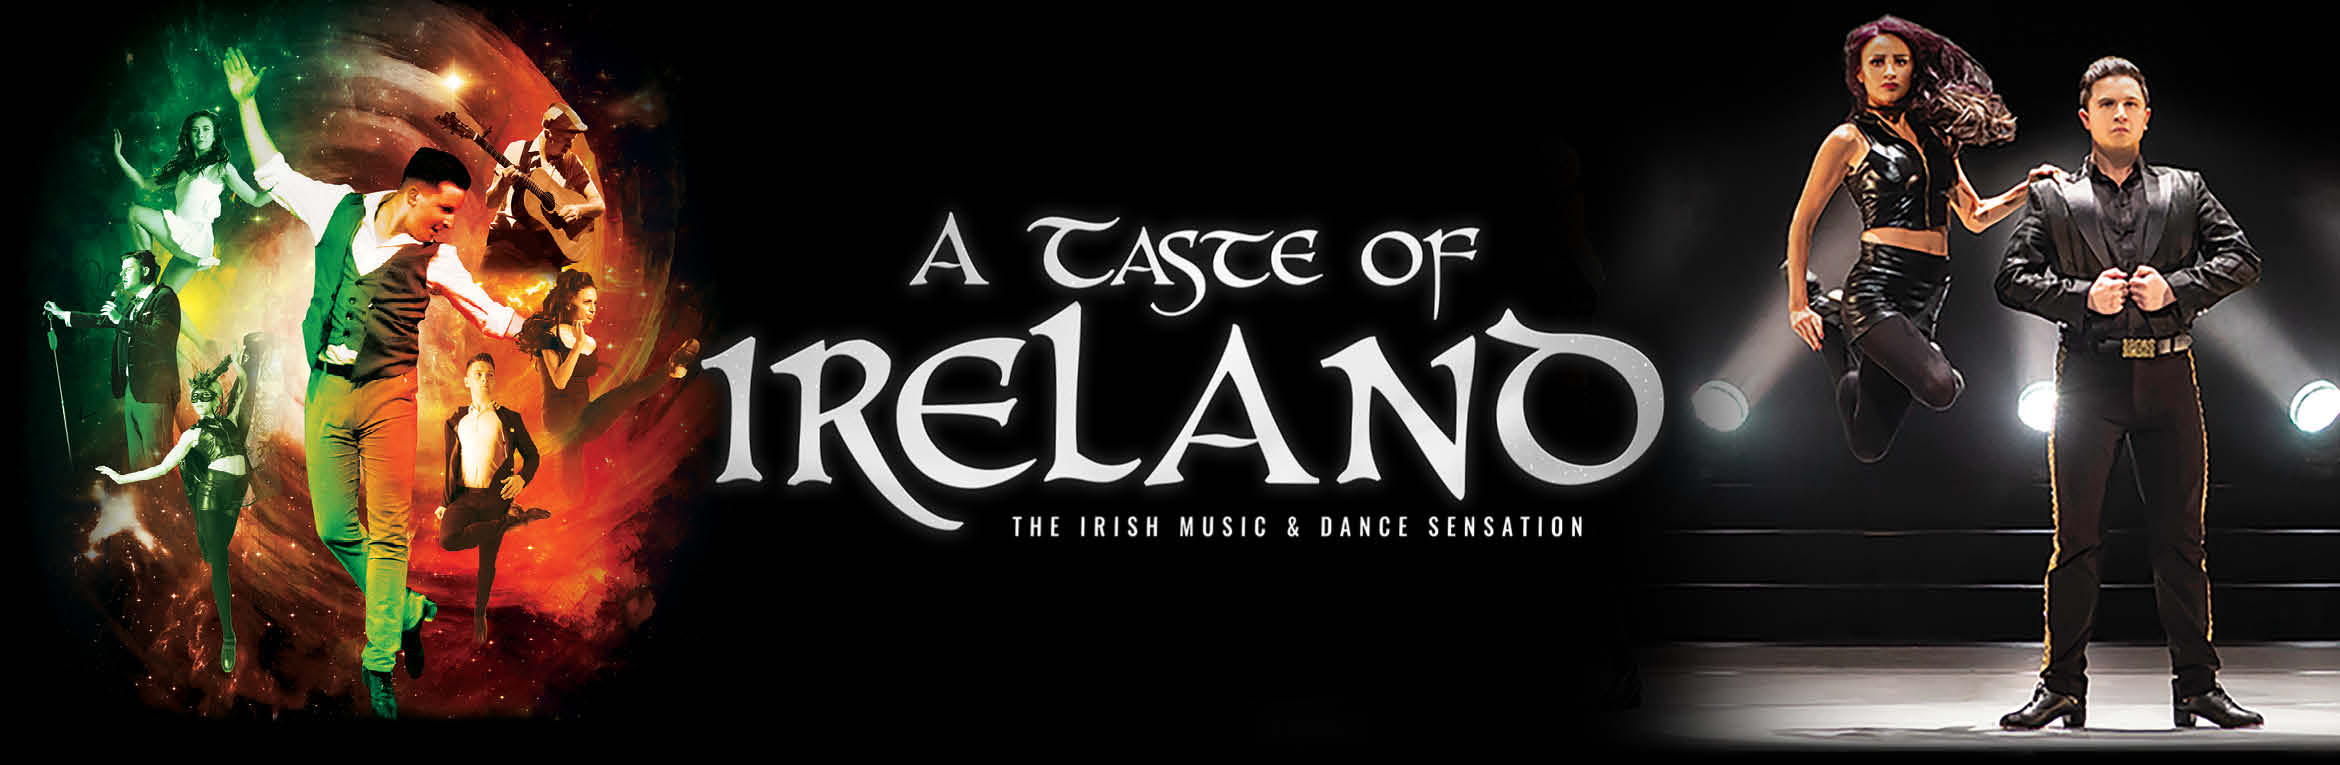 A Taste of Ireland -On Sale Soon